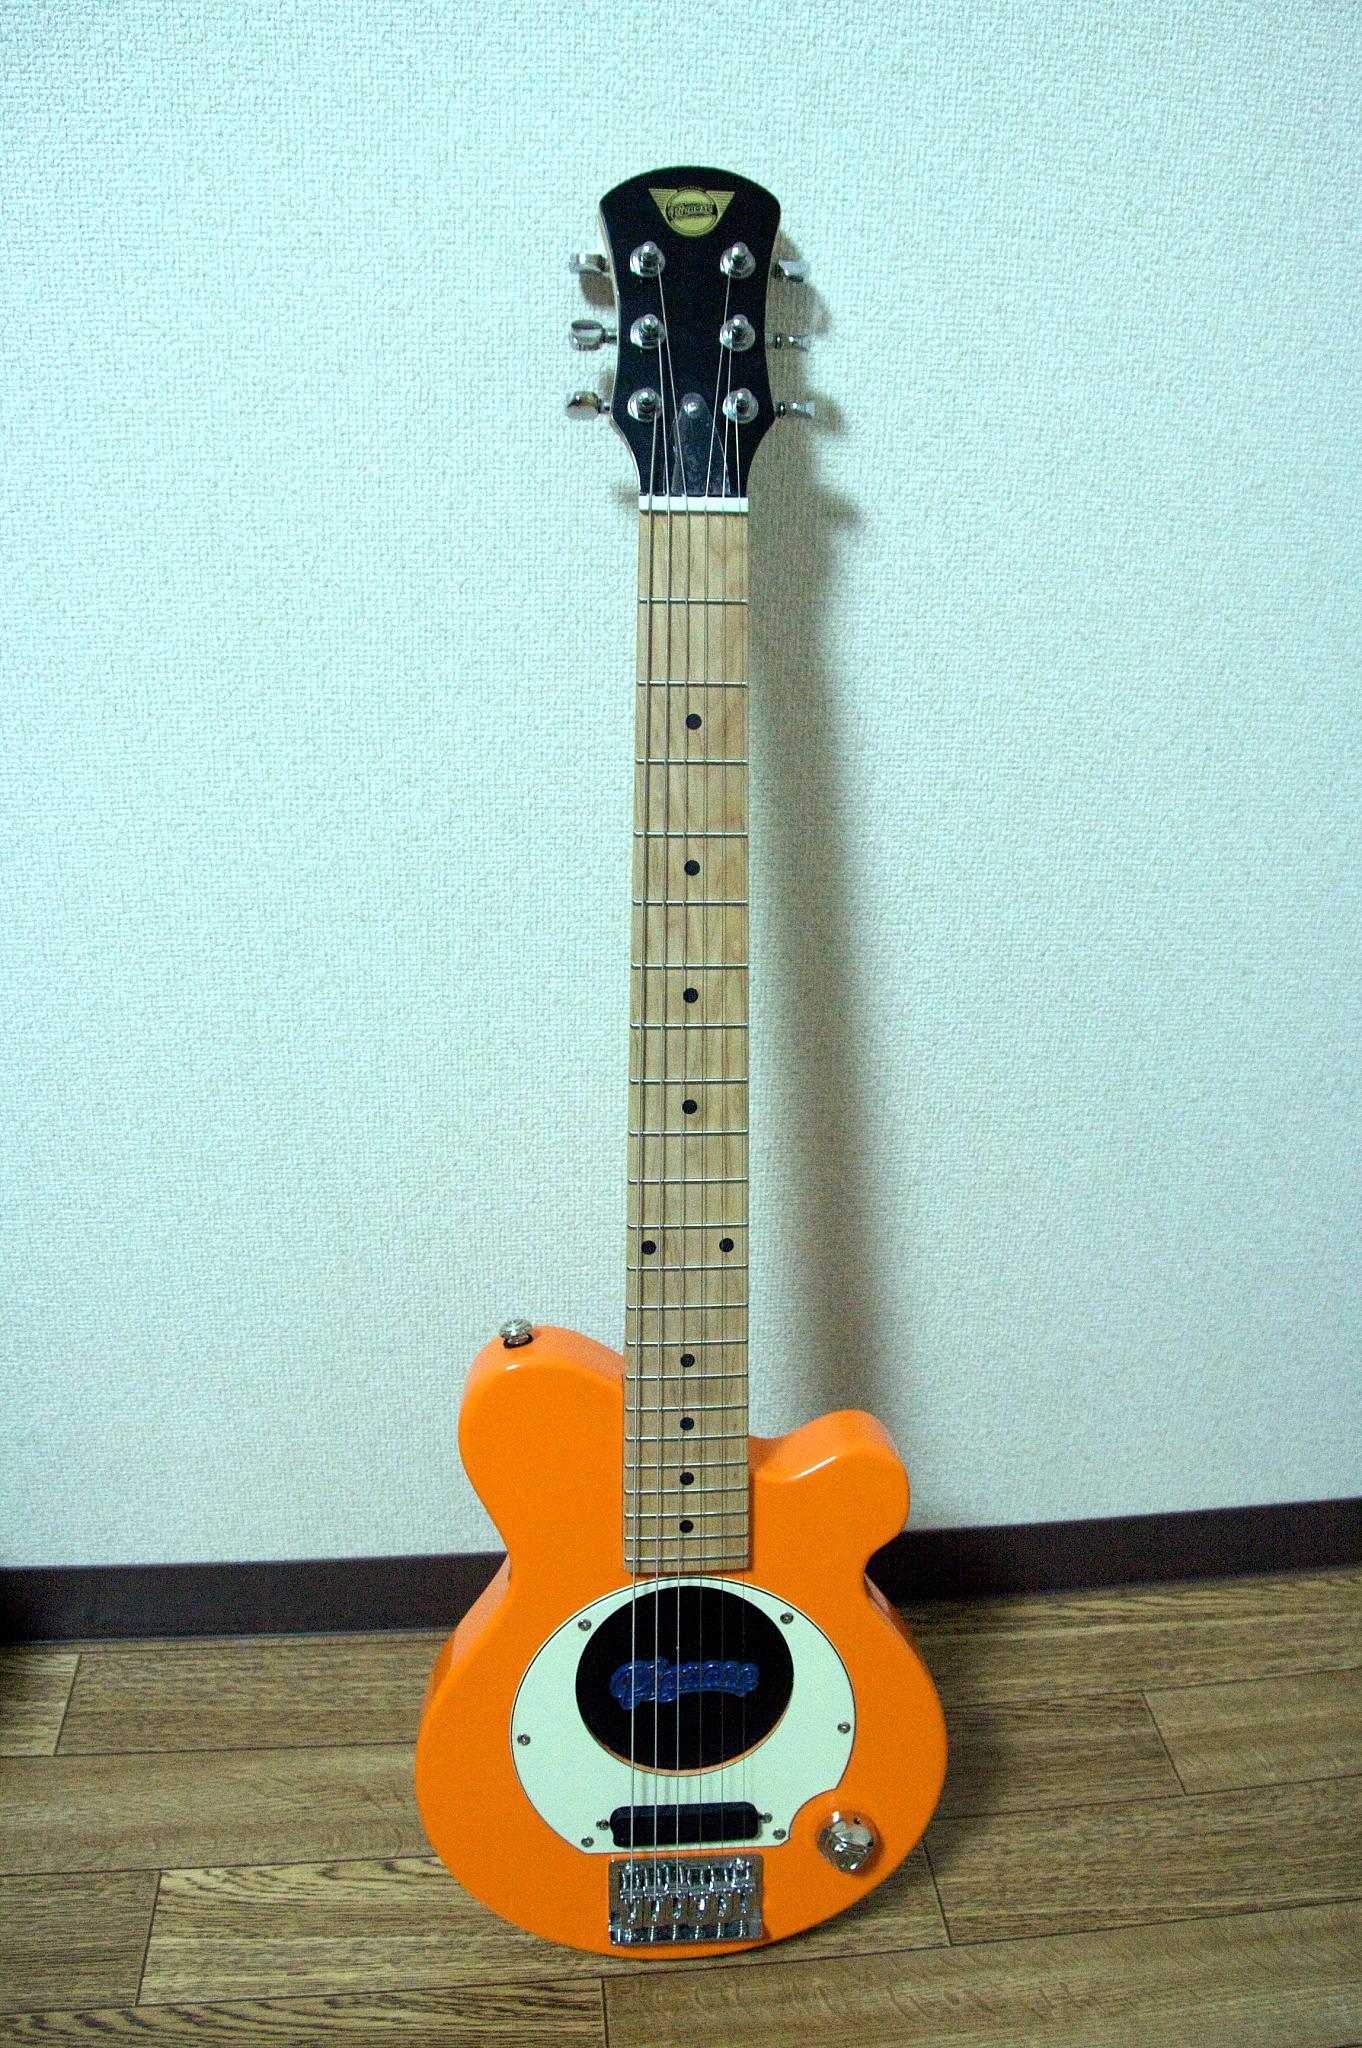 File:Pignose Mini Elec. Guitar with Built-In Amp.jpg - Wikimedia Commons